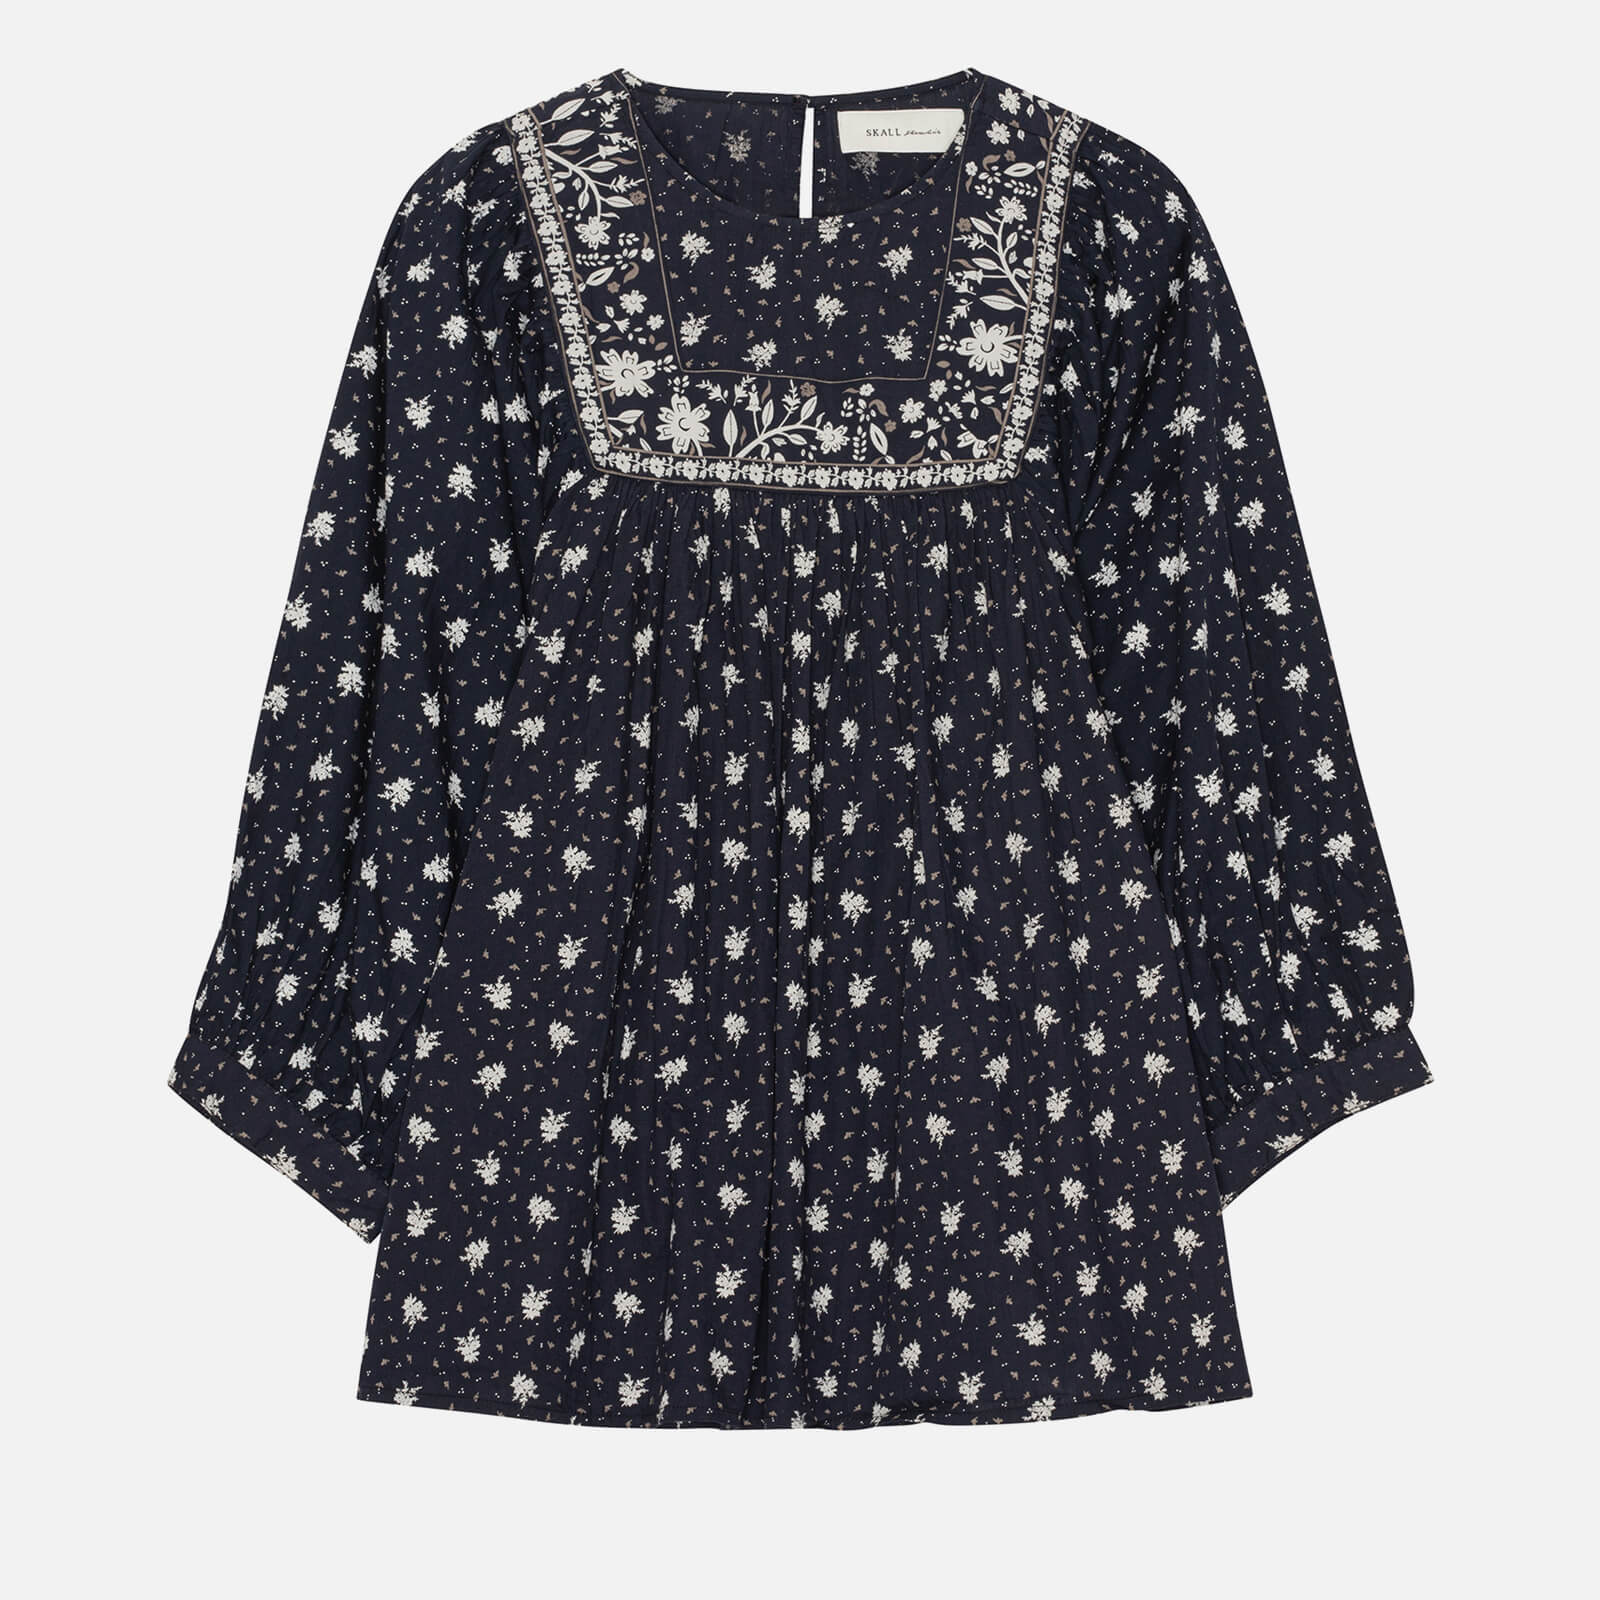 skall studio women's delphine blouse provence - provence print/navy - eu 36/uk 8